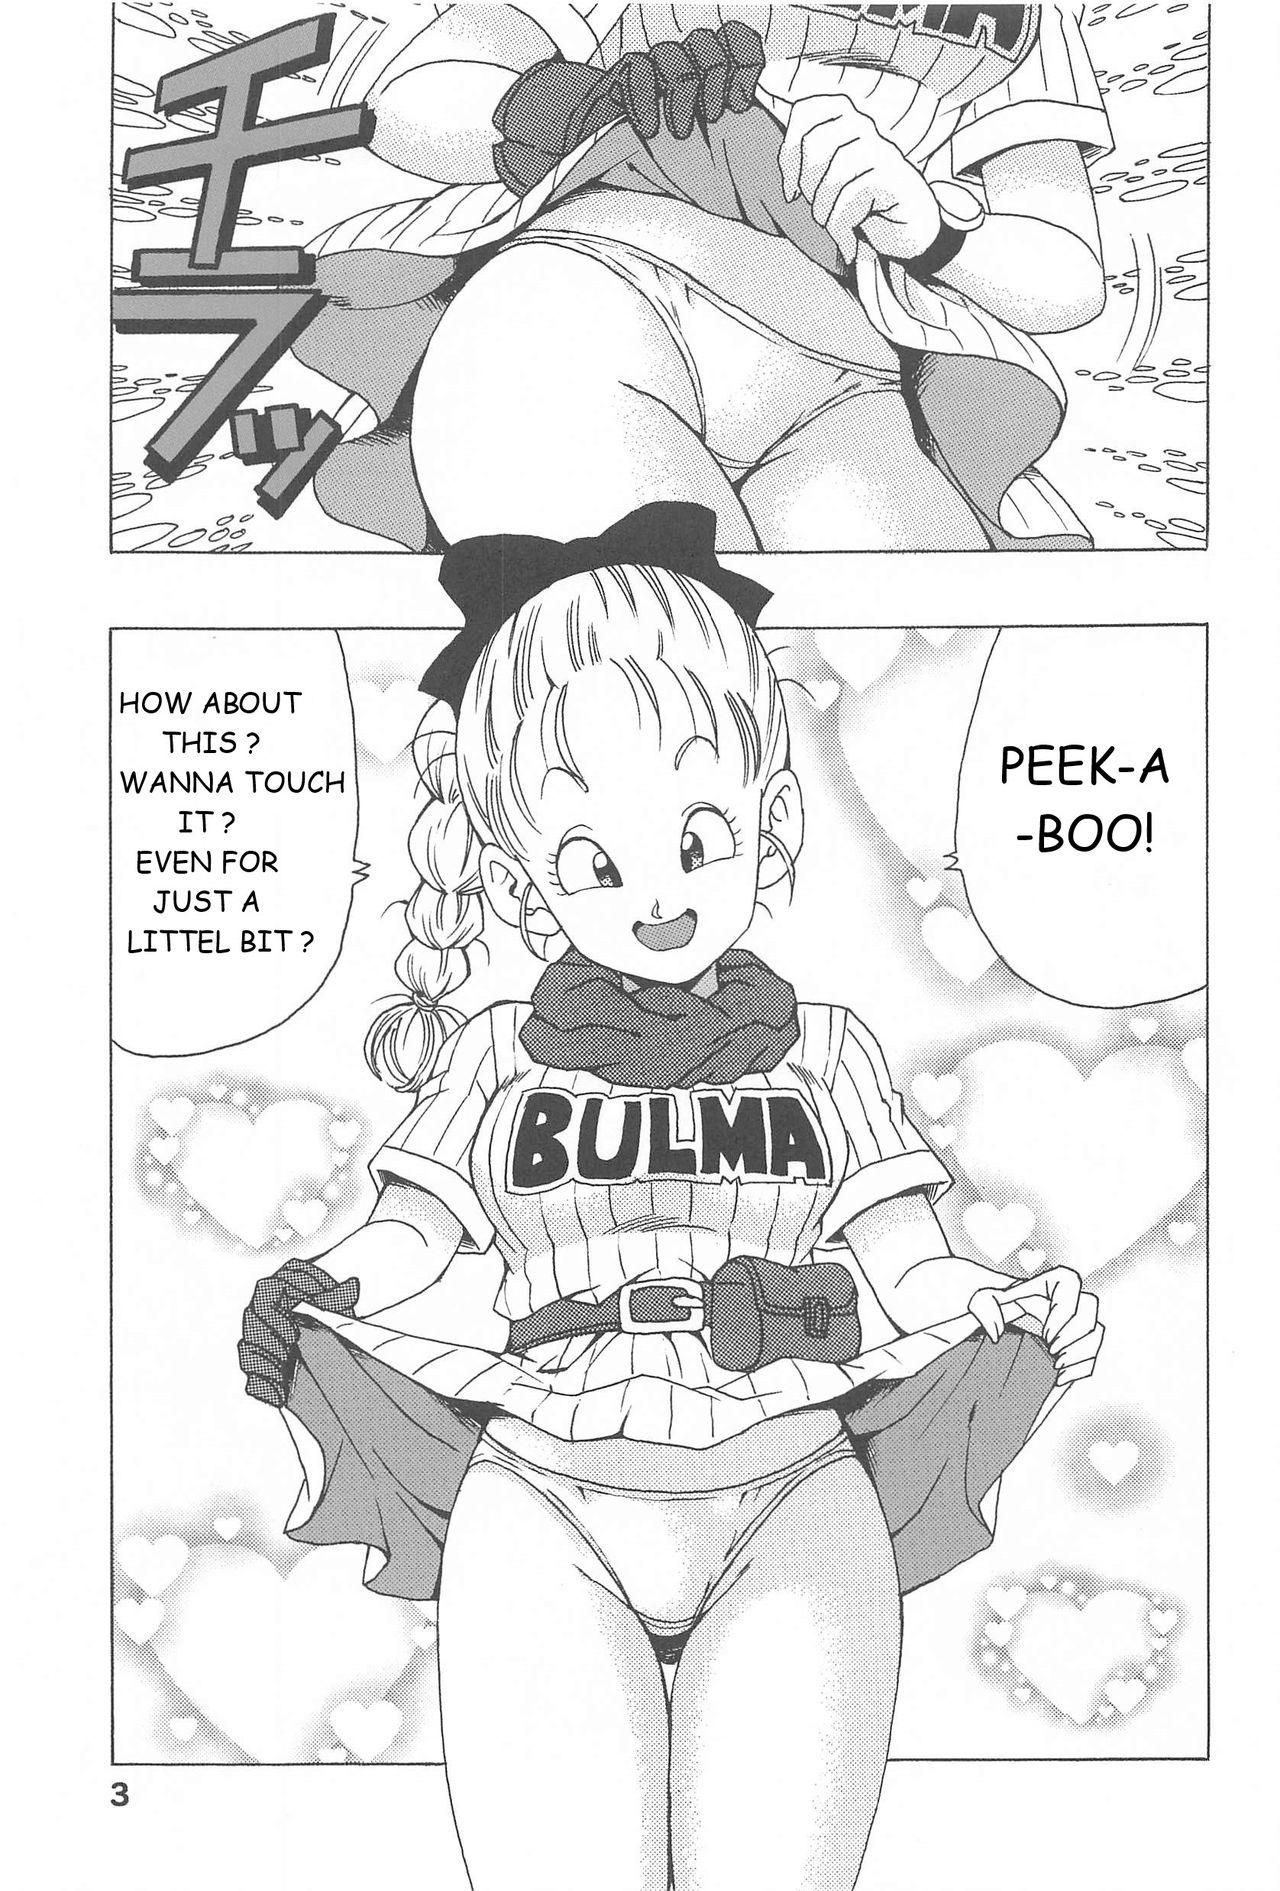 Playing Bulma no Saikyou e no Michi - Dragon ball Hoe - Page 3